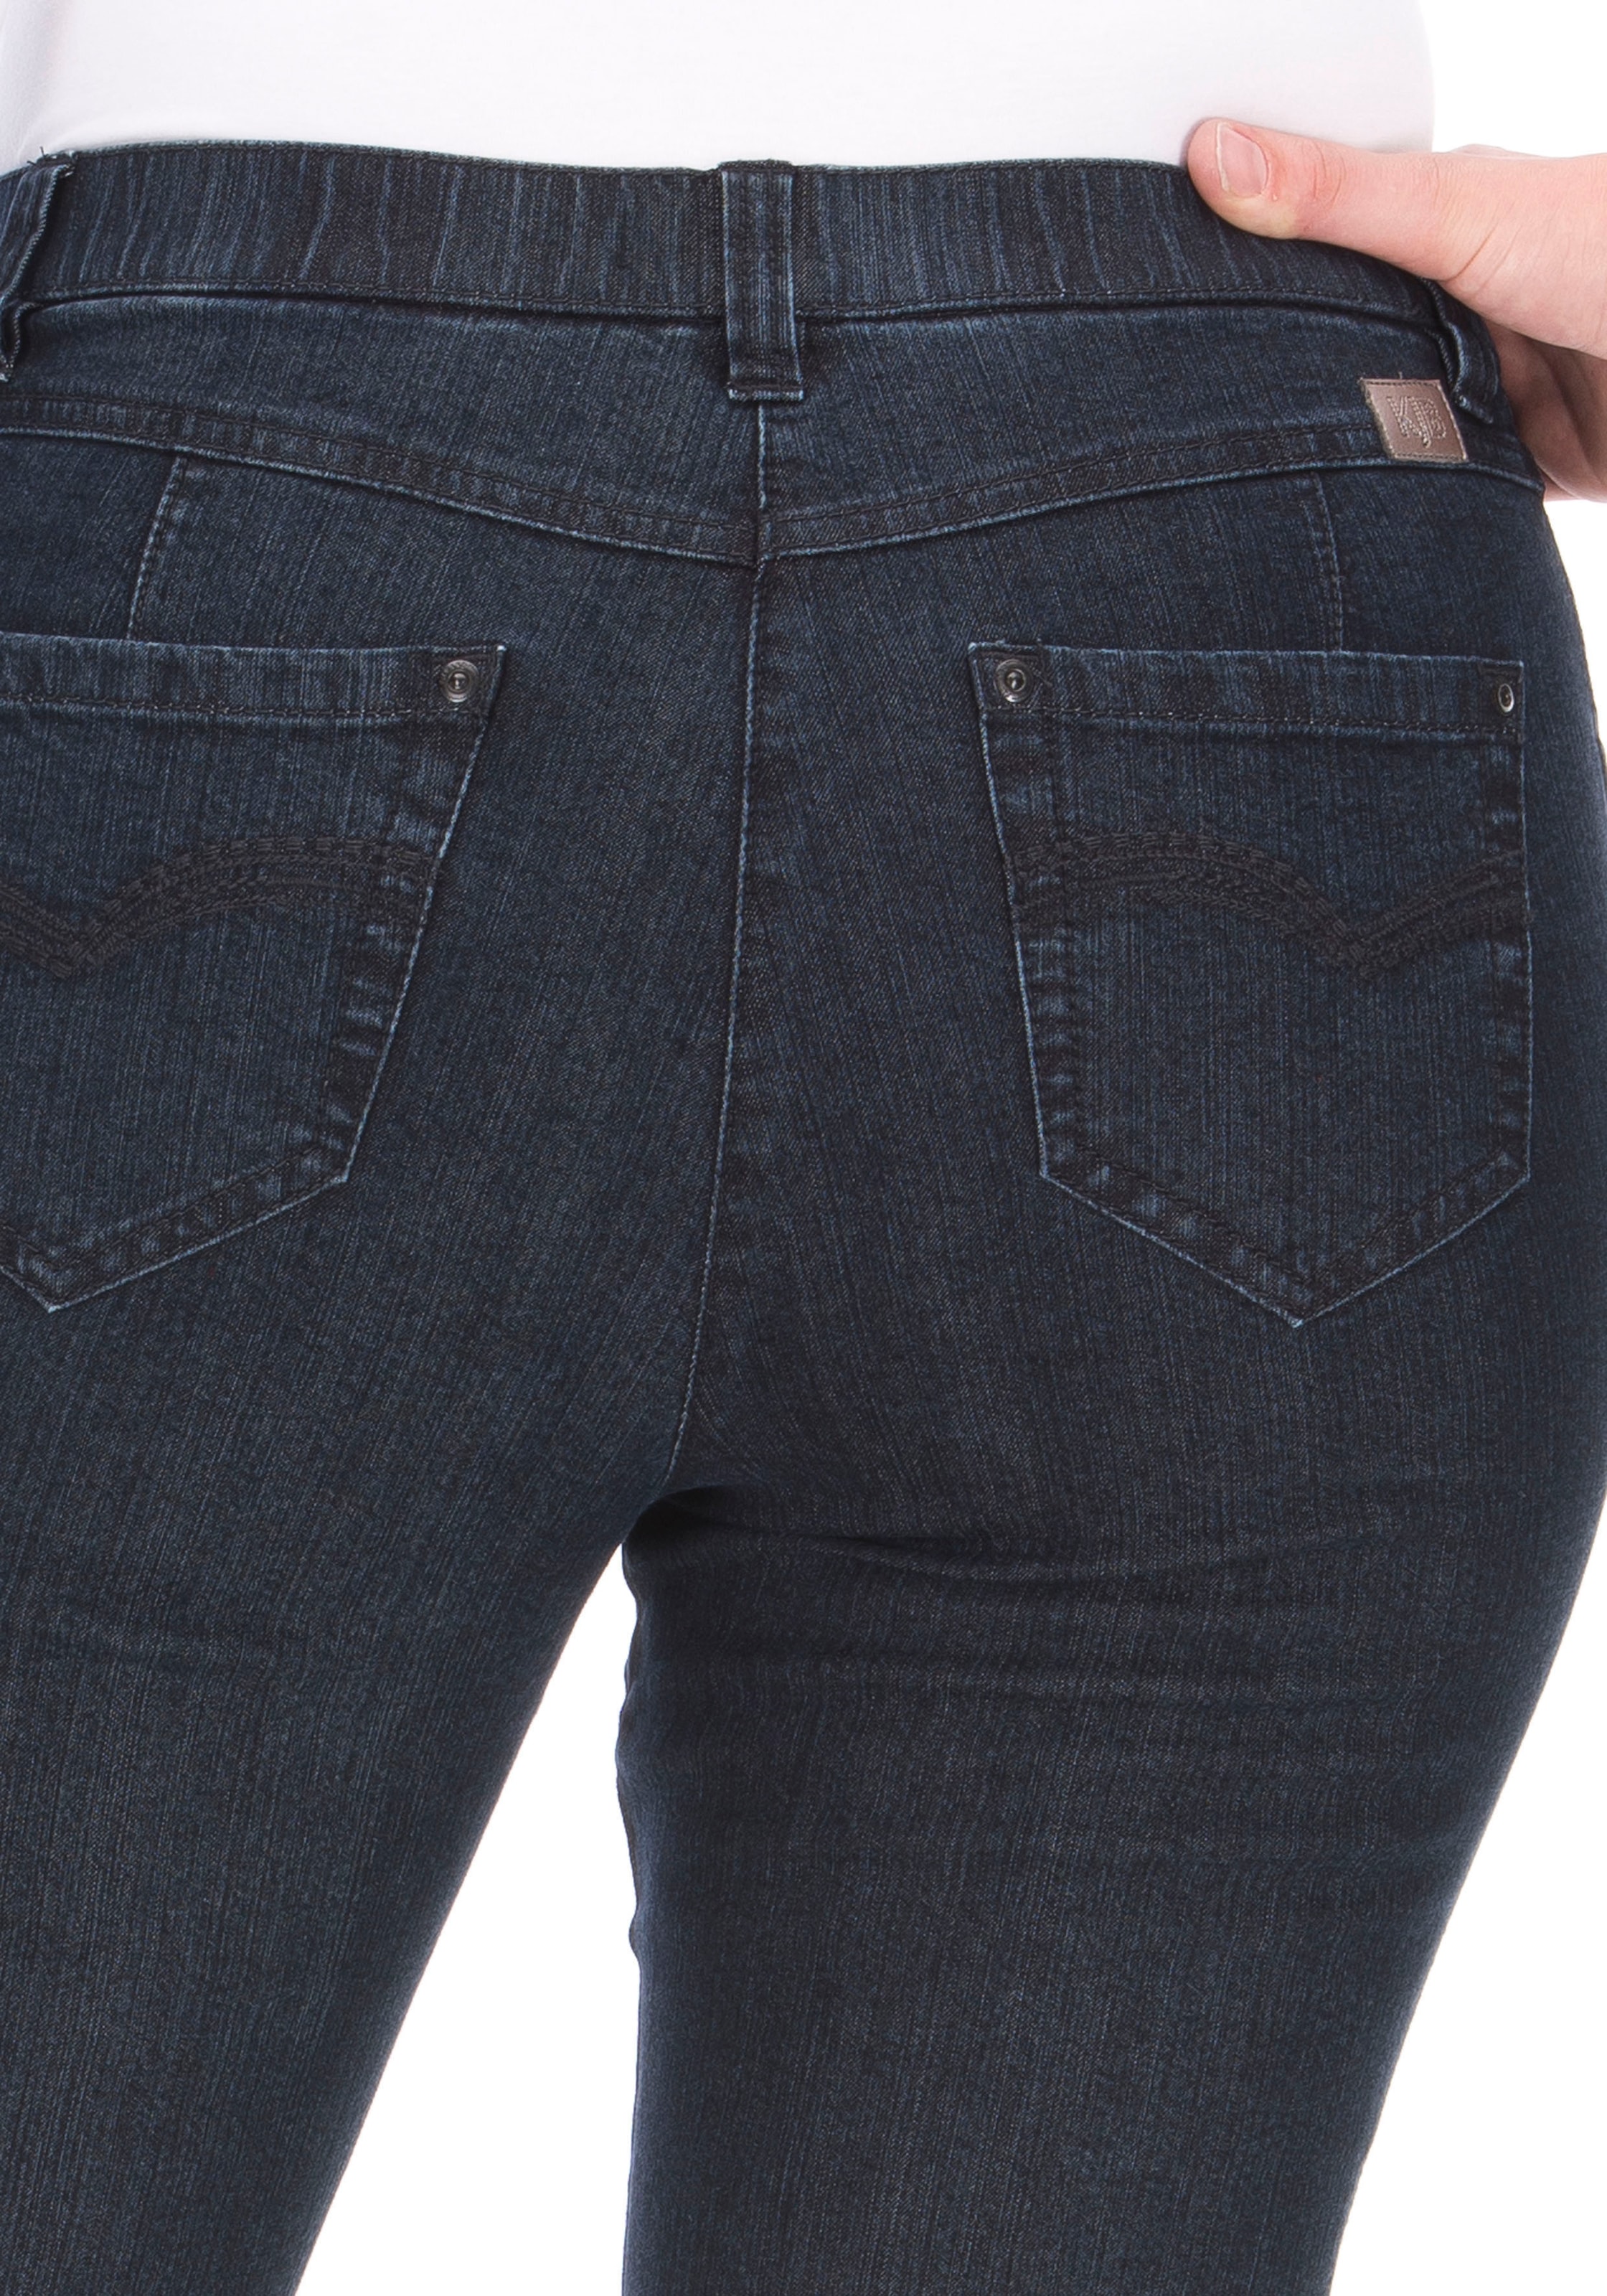 KjBRAND Stretch-Jeans »Betty CS Stretch BAUR kaufen | mit Denim Stretch«, für